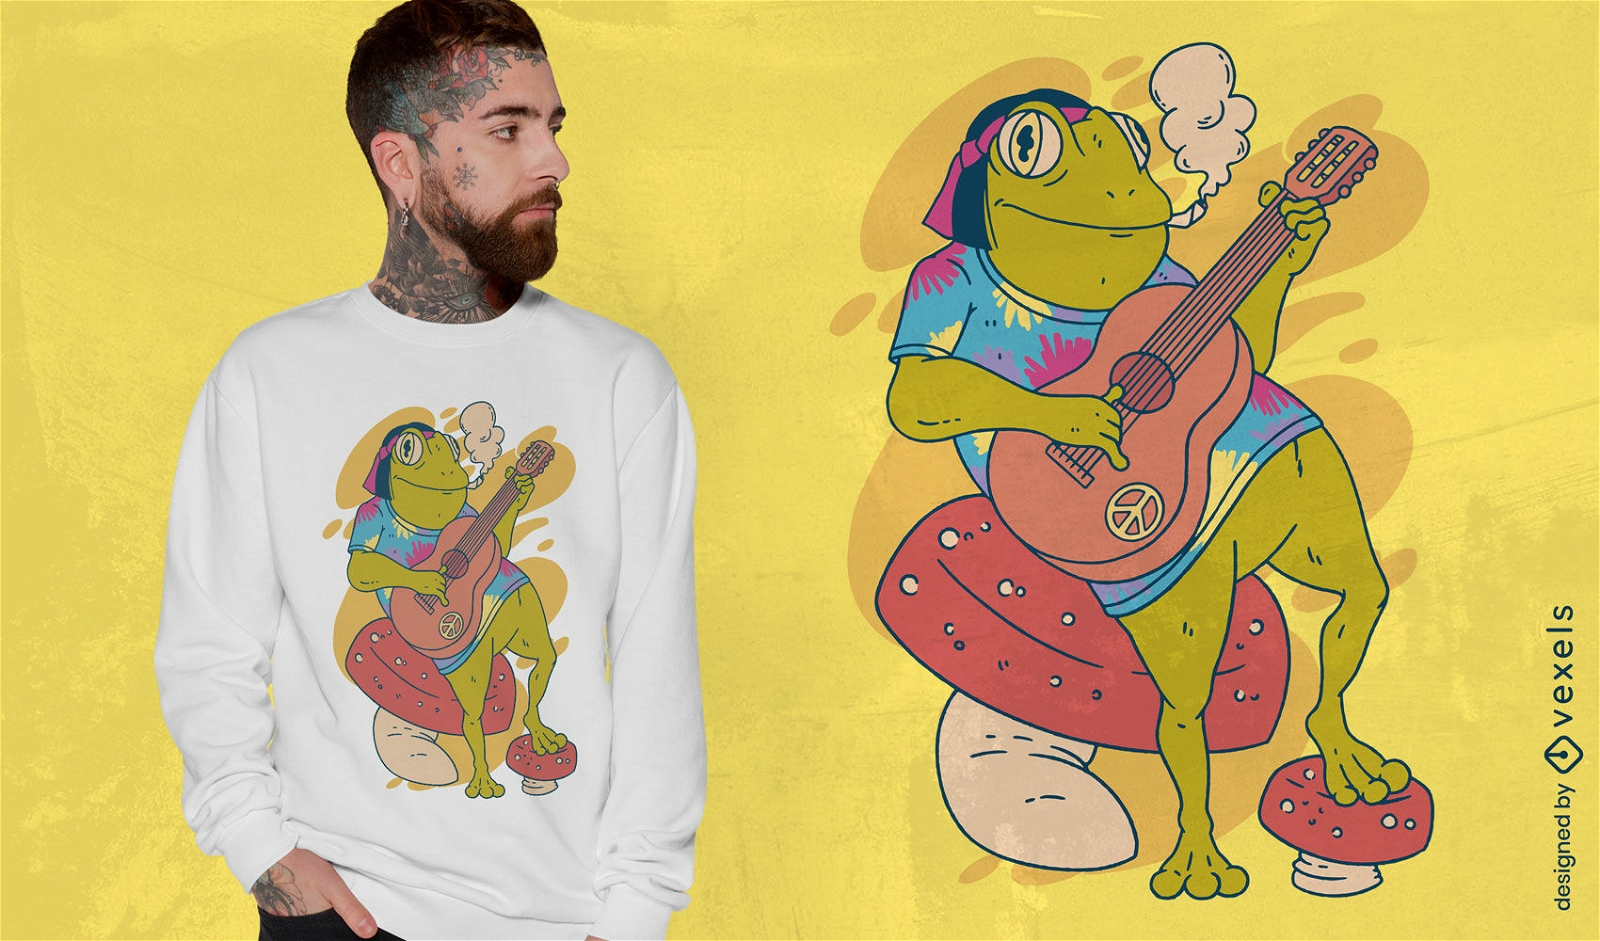 Hippie frog playing guitar t-shirt design